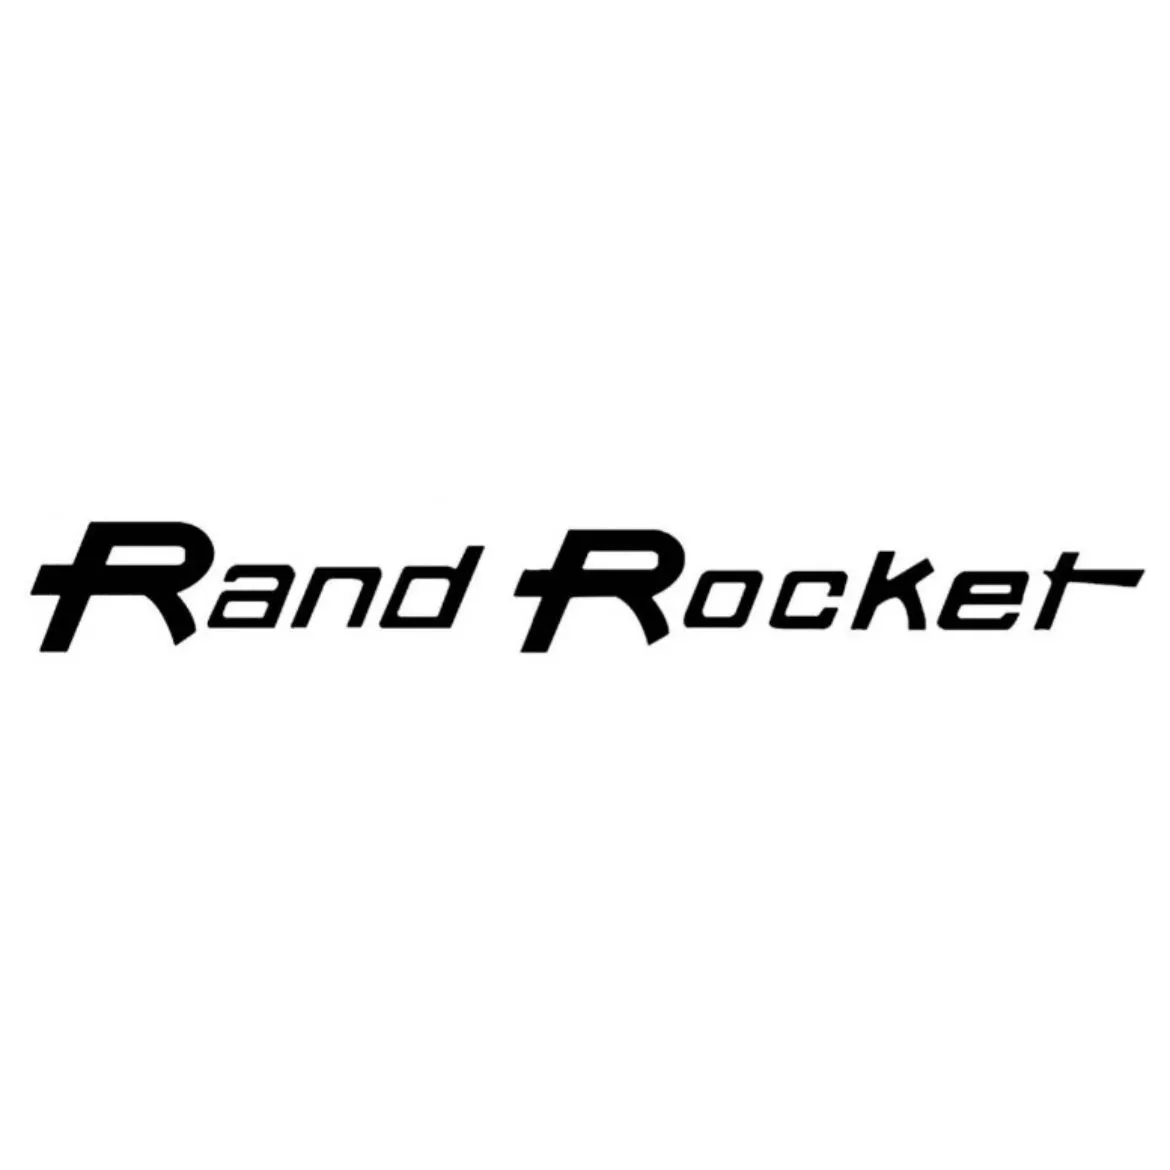 Rand Rocket Professional